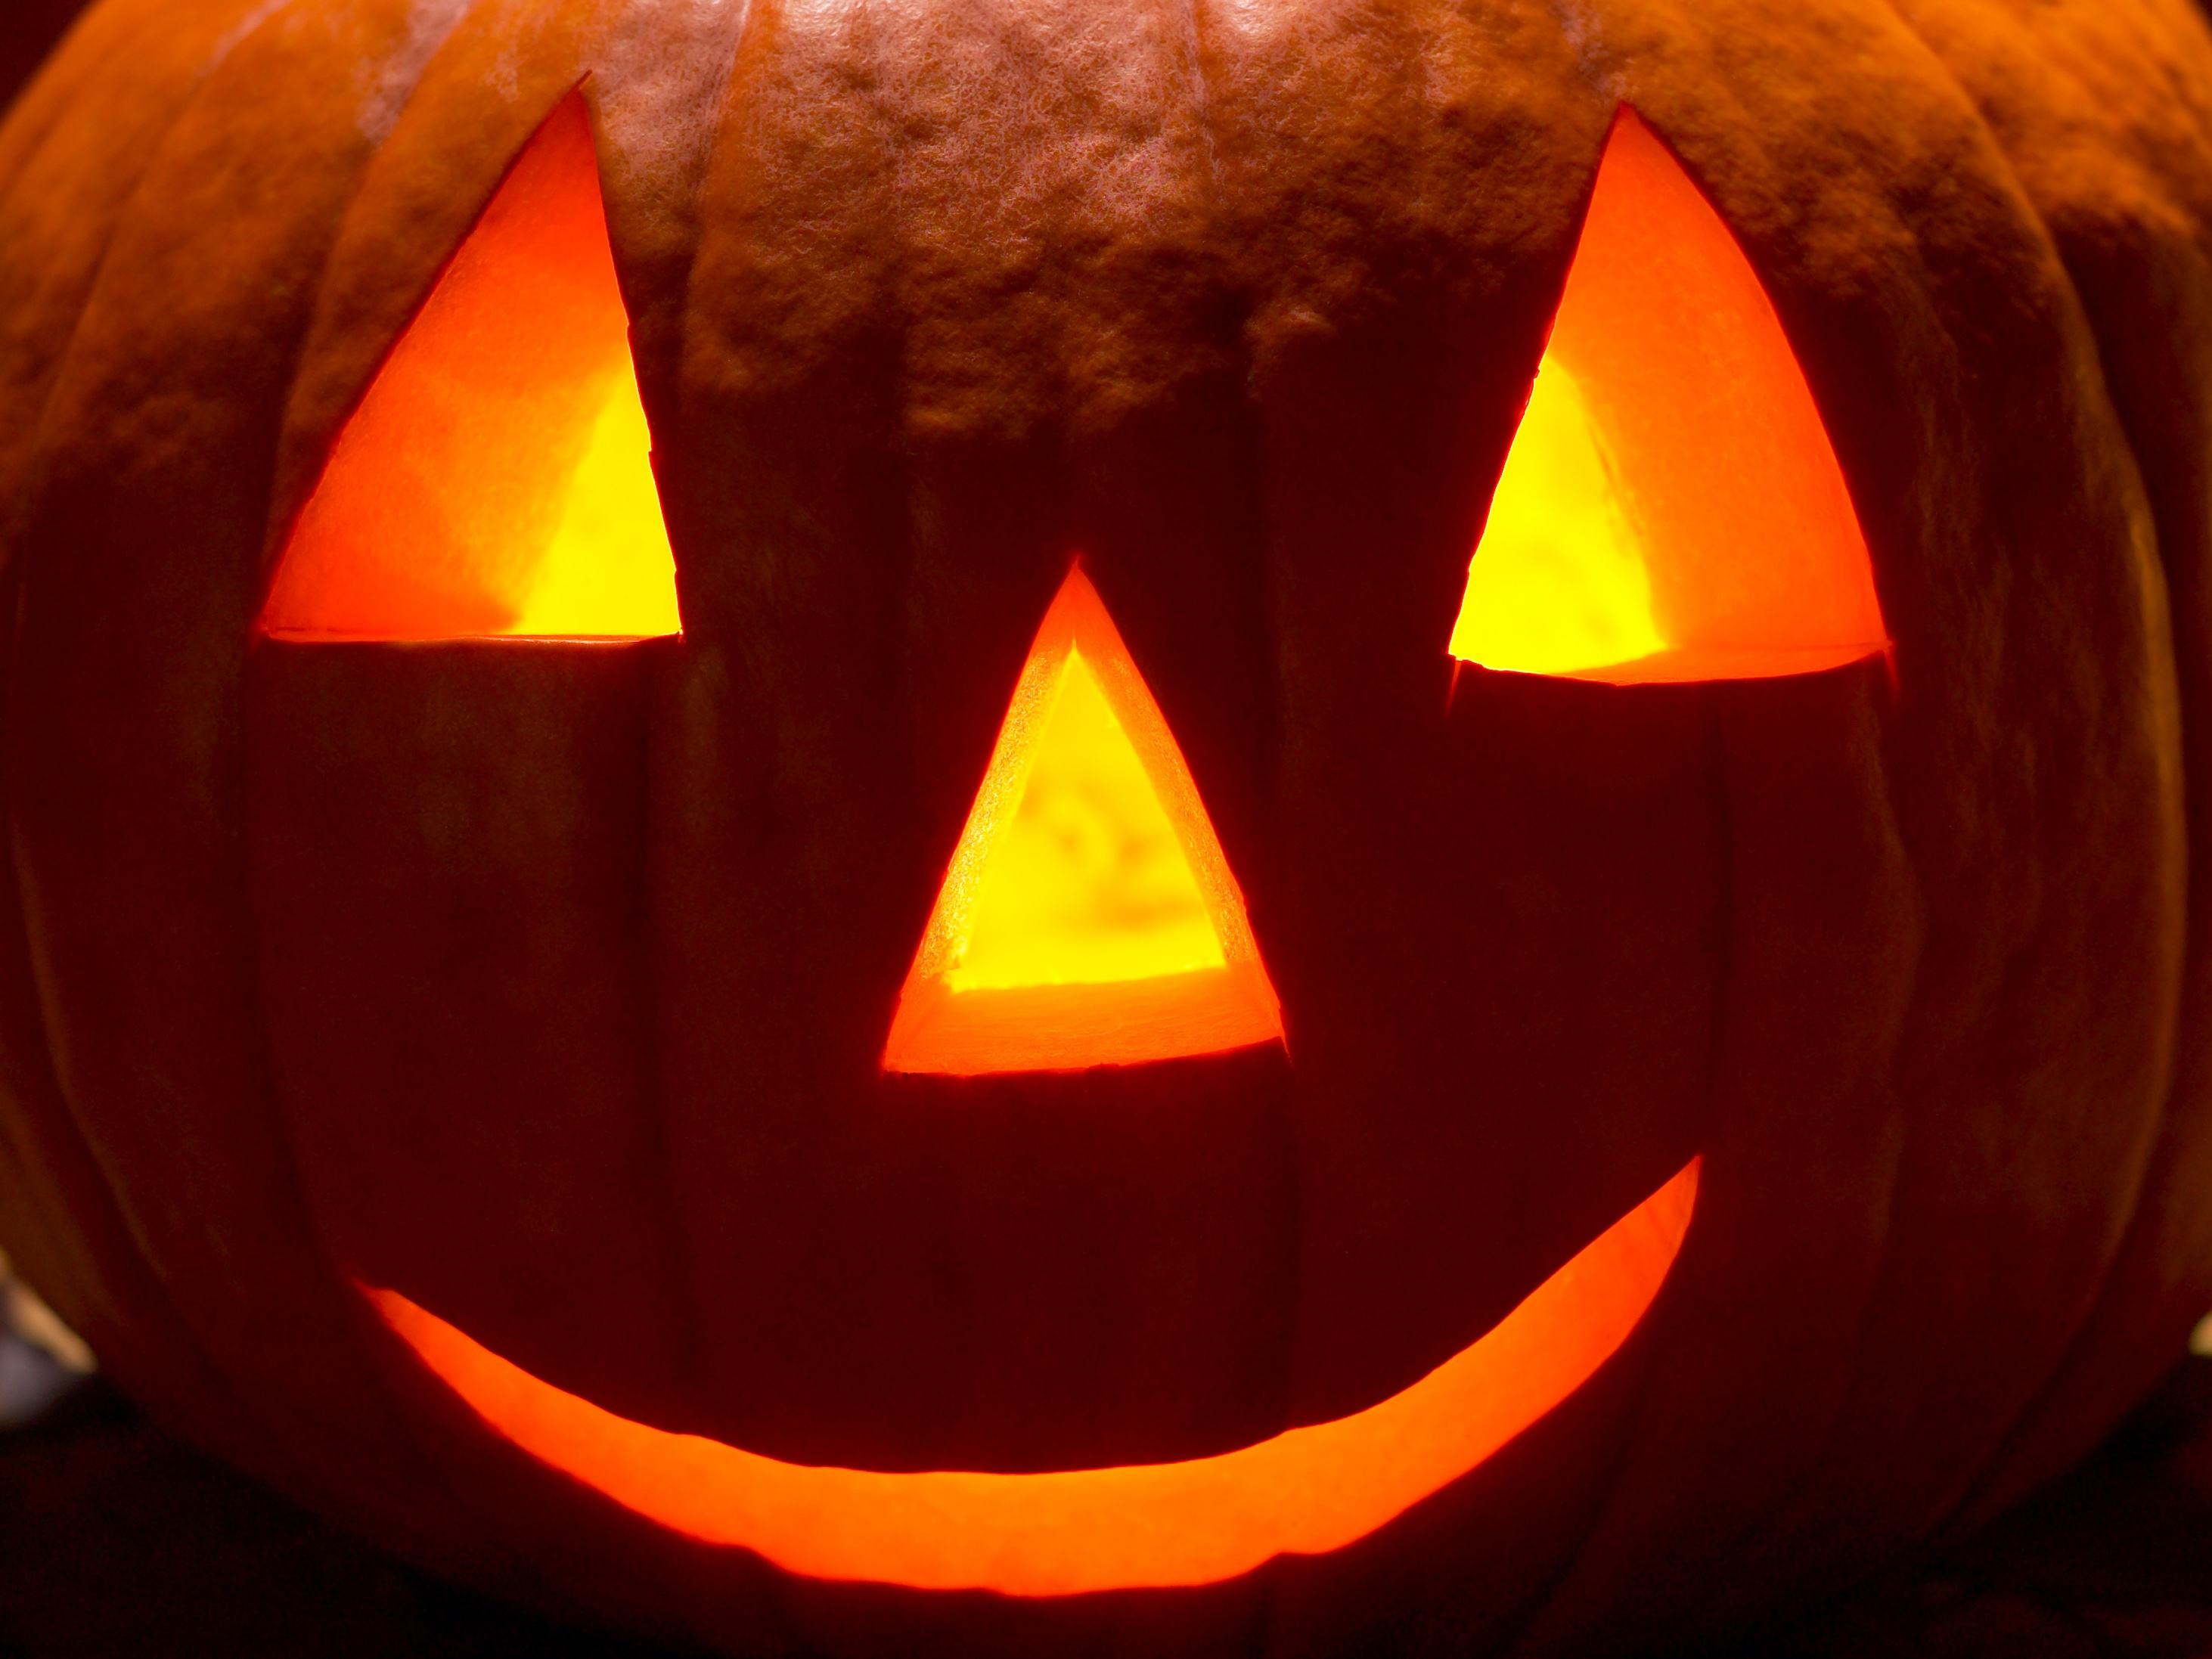 Halloween Pumpkin Jack o lantern Face Bath Throw Rug Cotton Orange 24” NWT $30 